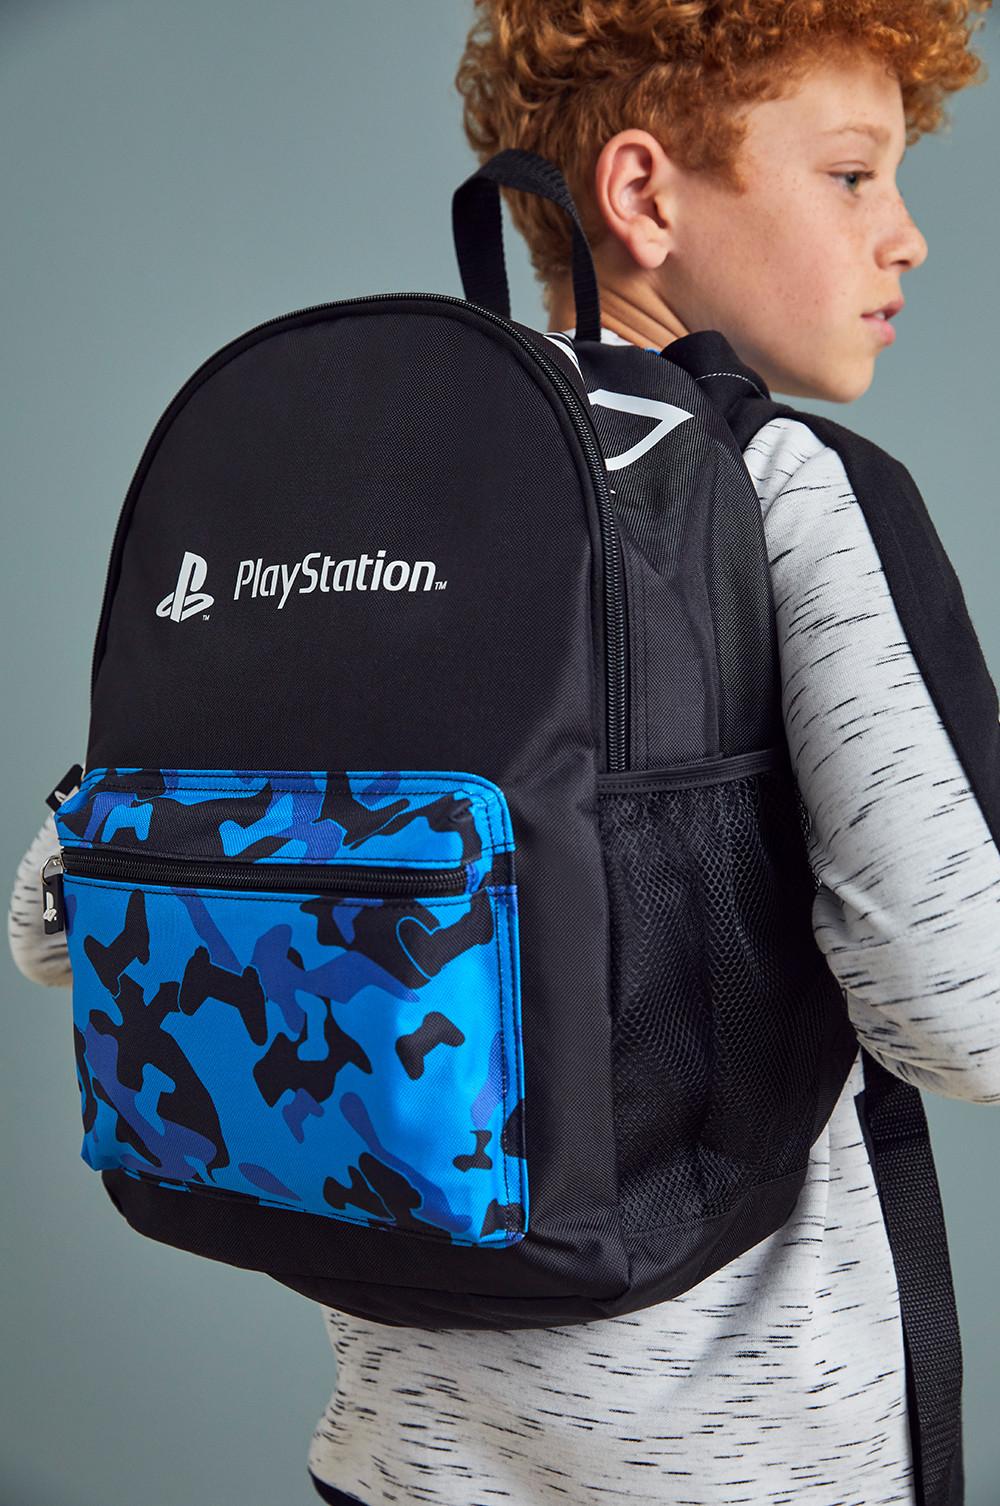 Playstation Backpack